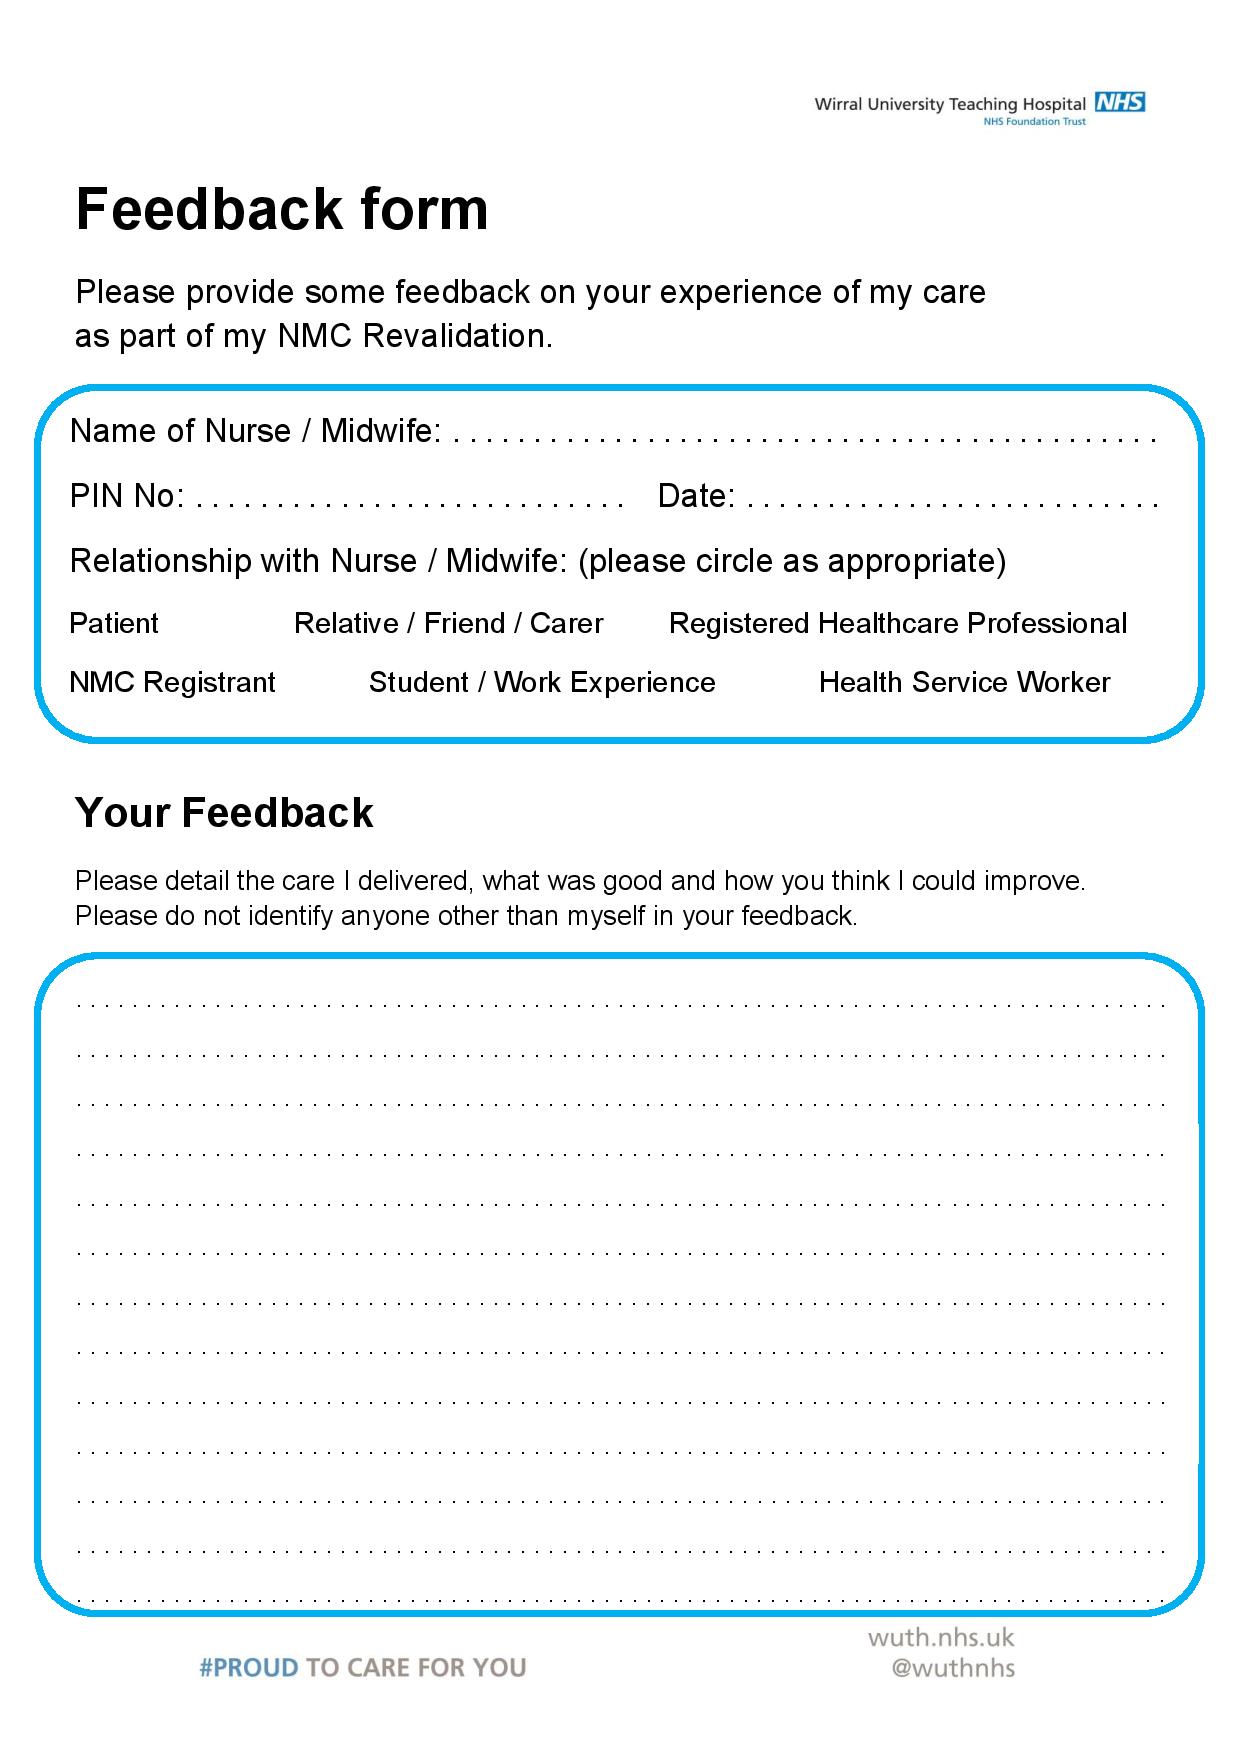 revalidation feedback form page 001